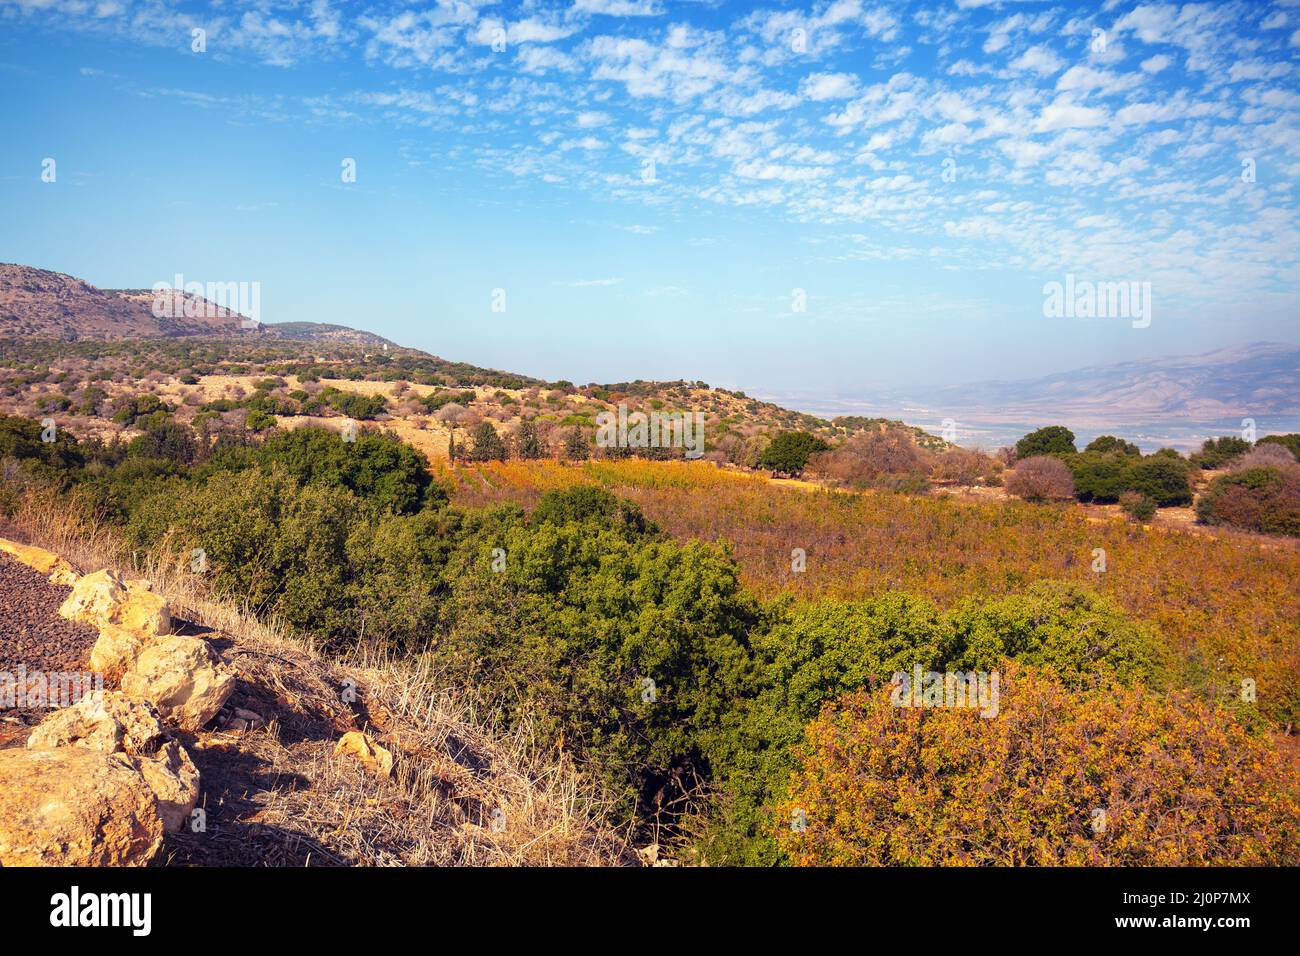 Hills near the Sea of Galilee, Israel Stock Photo